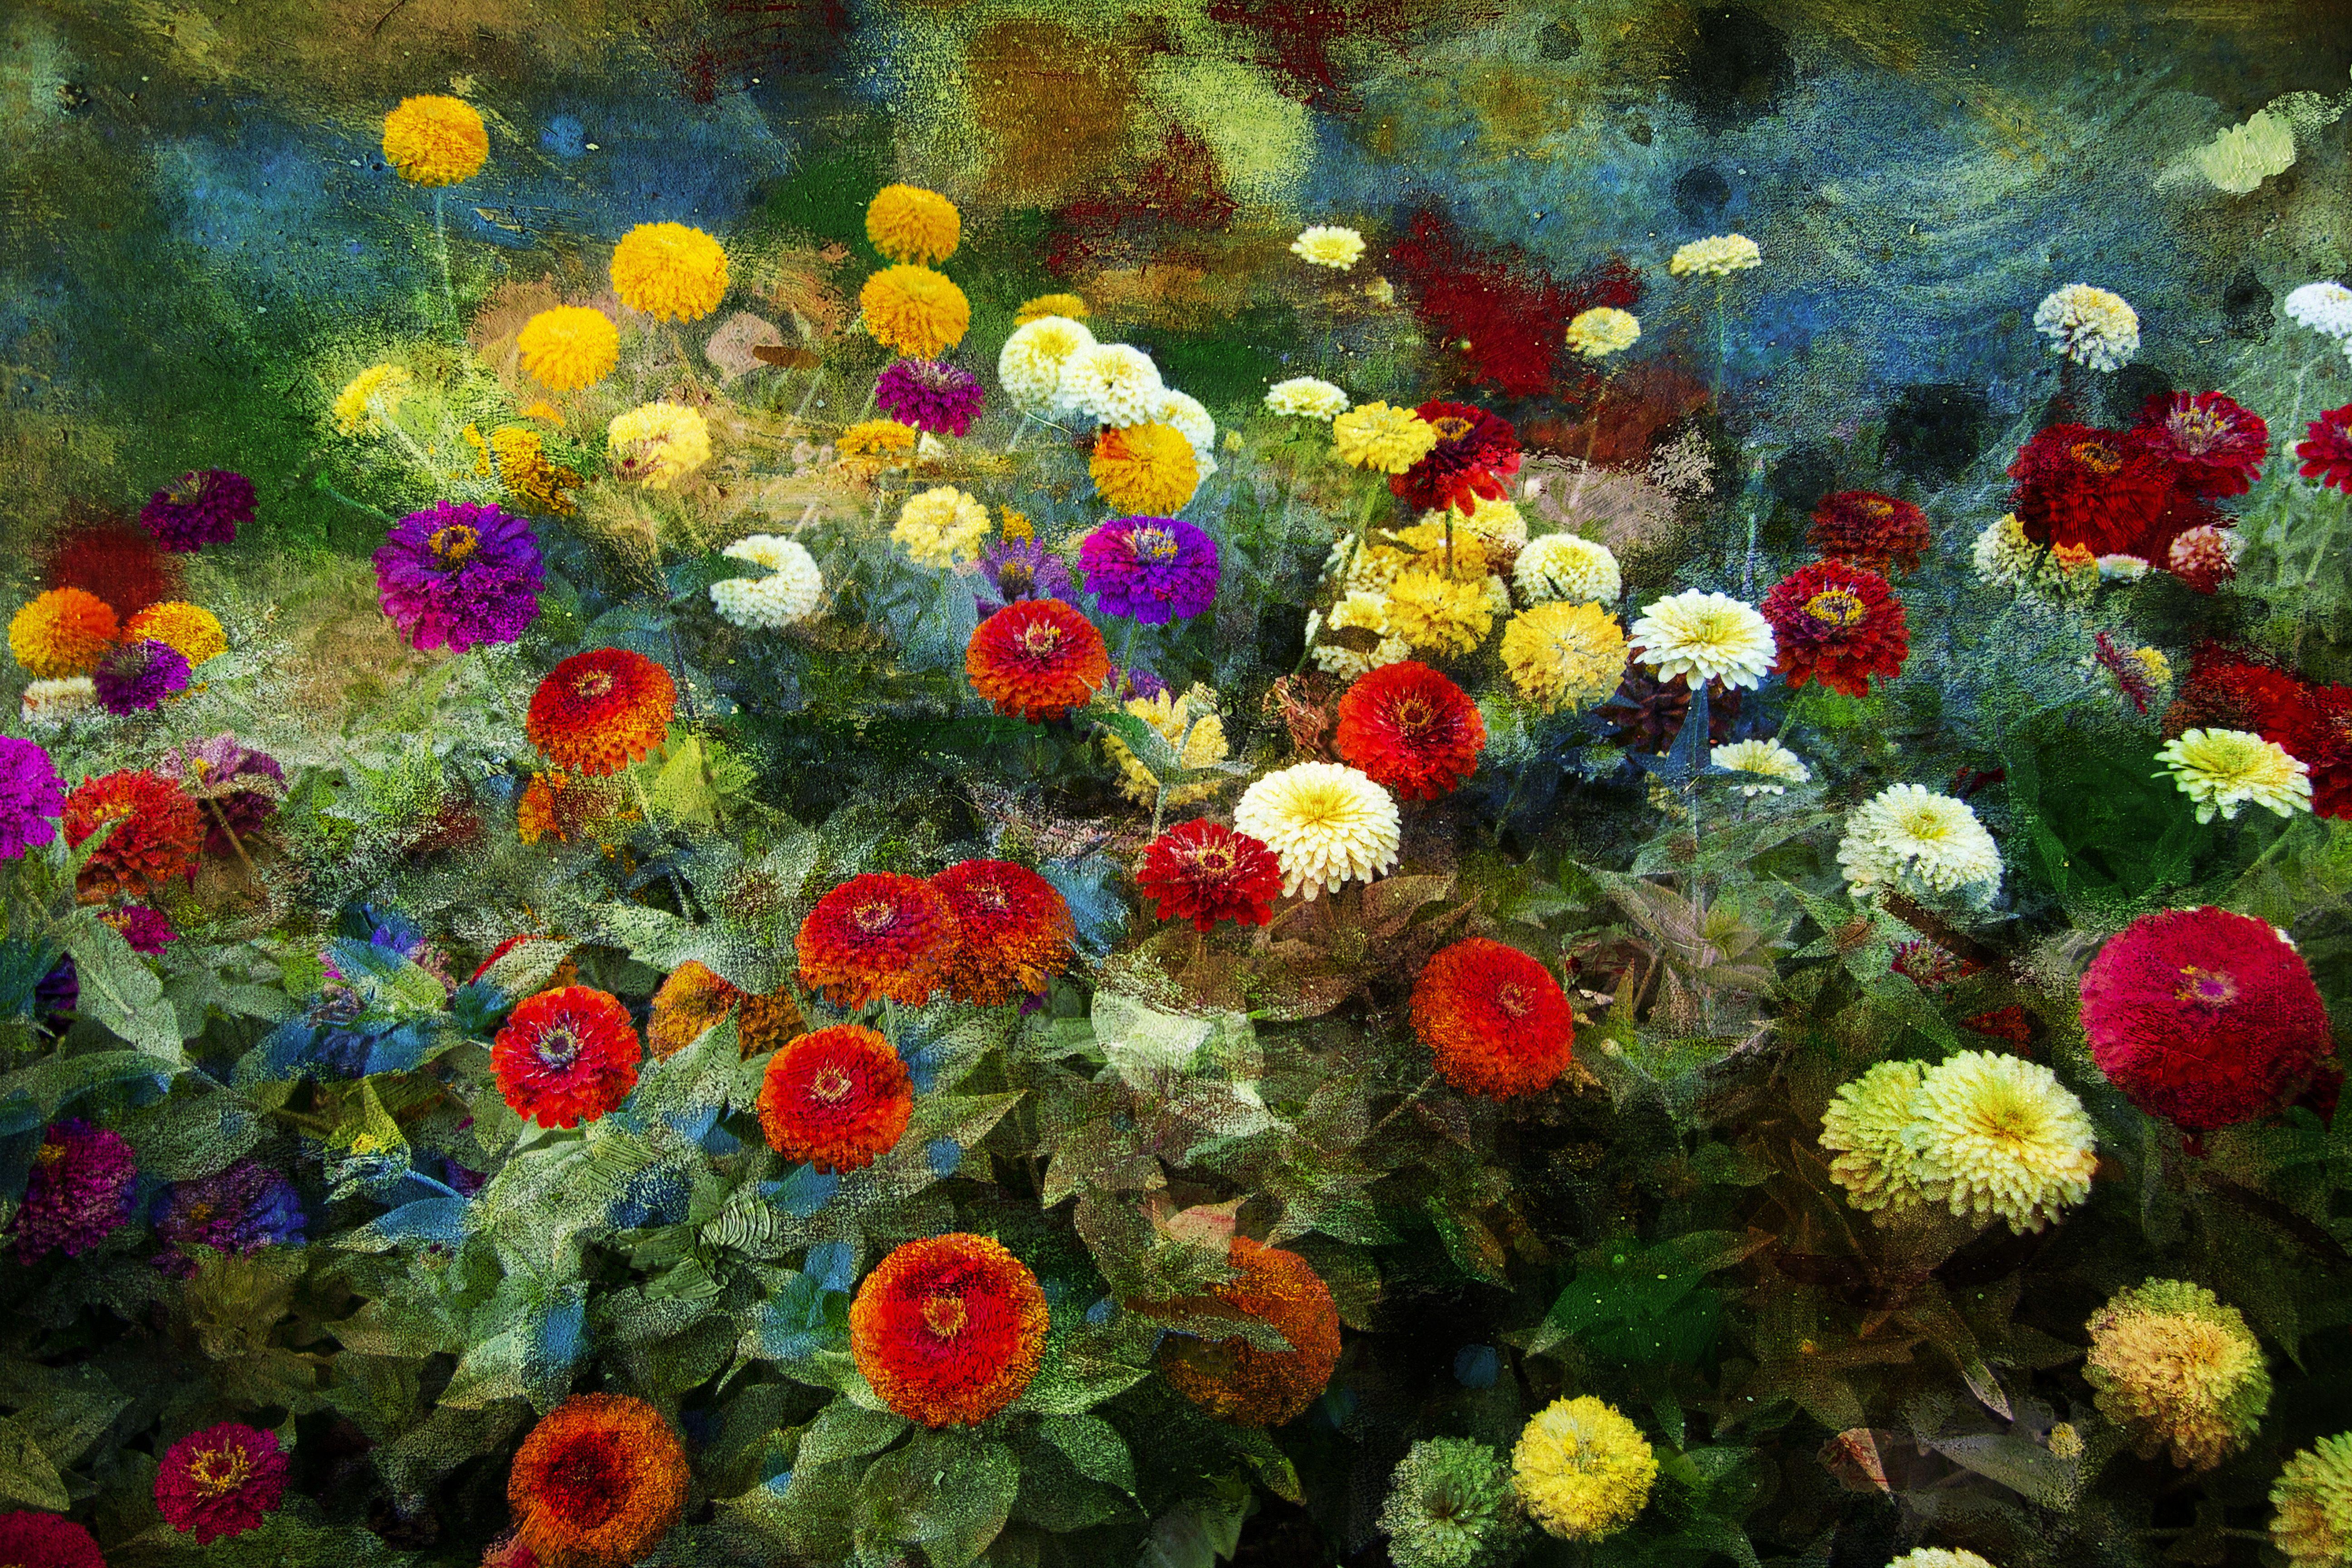 Viet Ha Tran Color Photograph - The memories of flowers, Photograph, C-Type